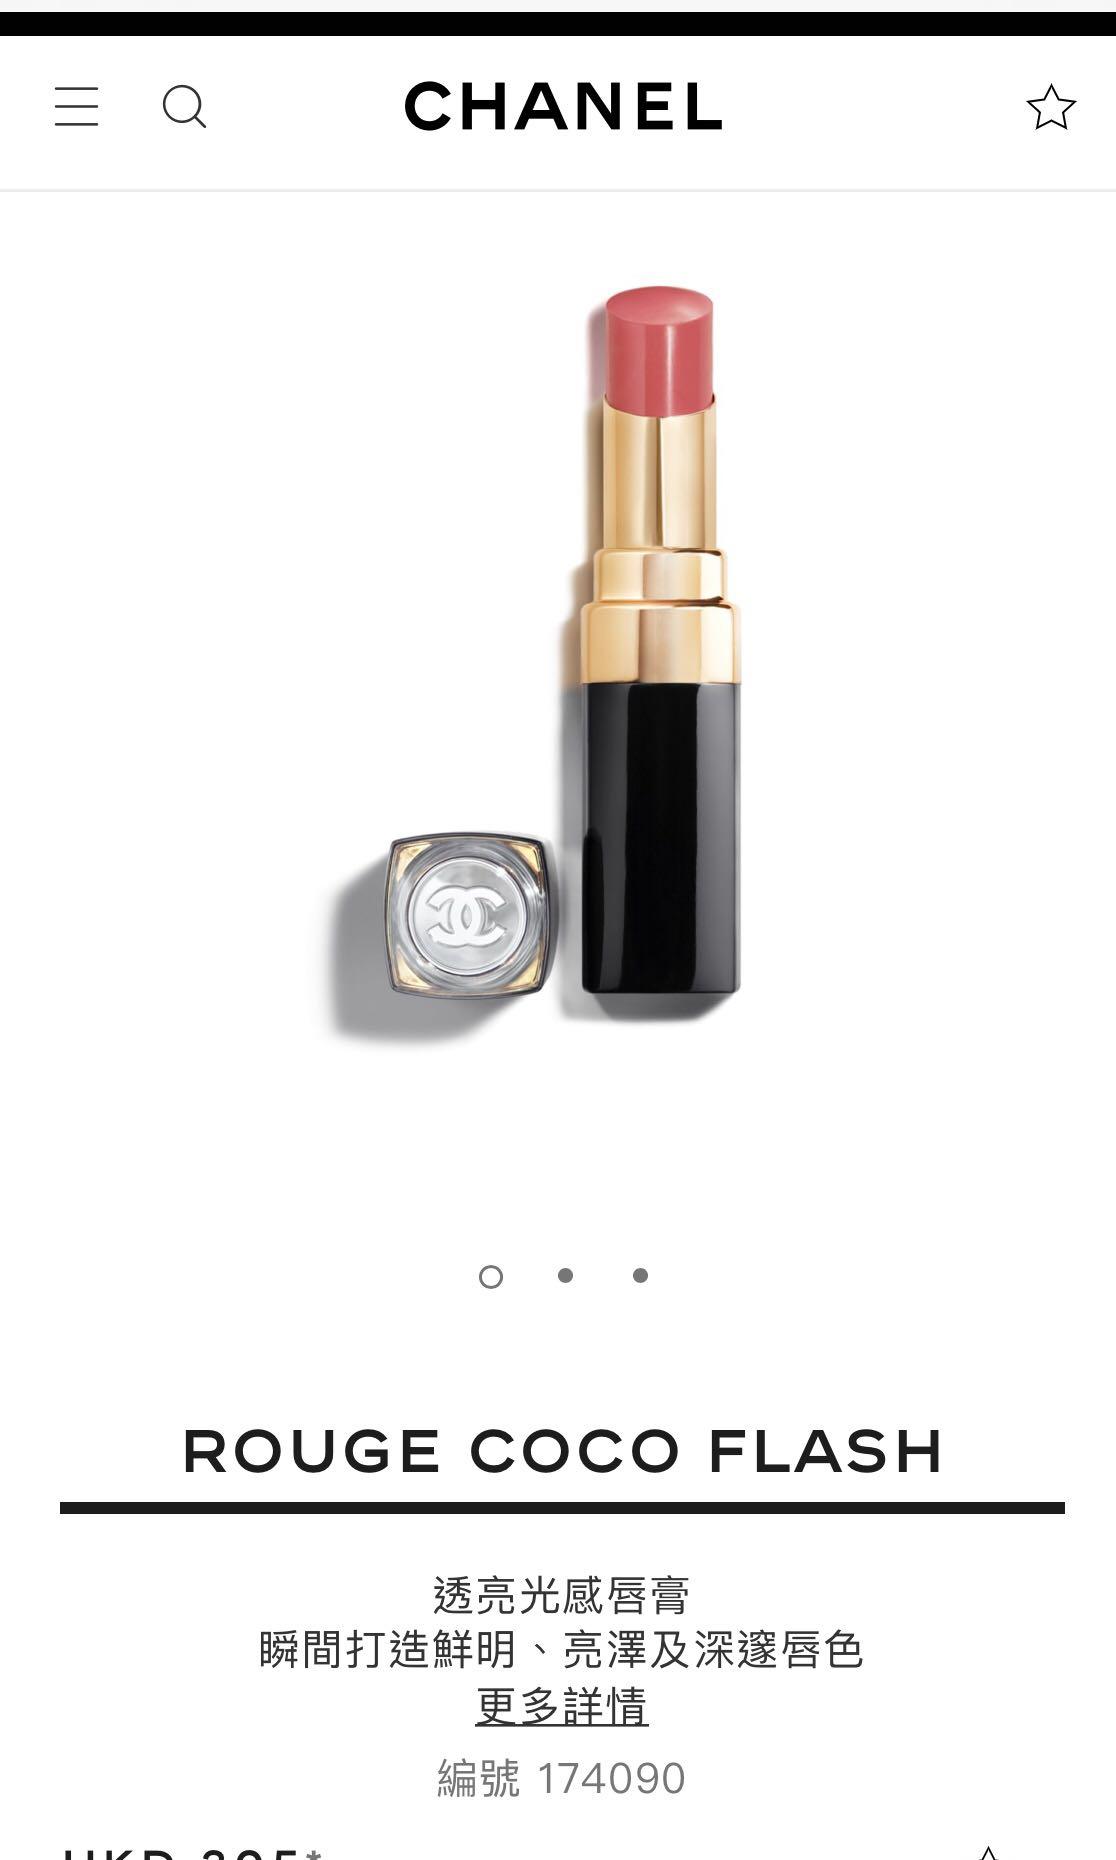 Chanel Rouge Coco Flash Picks + Voyage de Chanel Travel Face